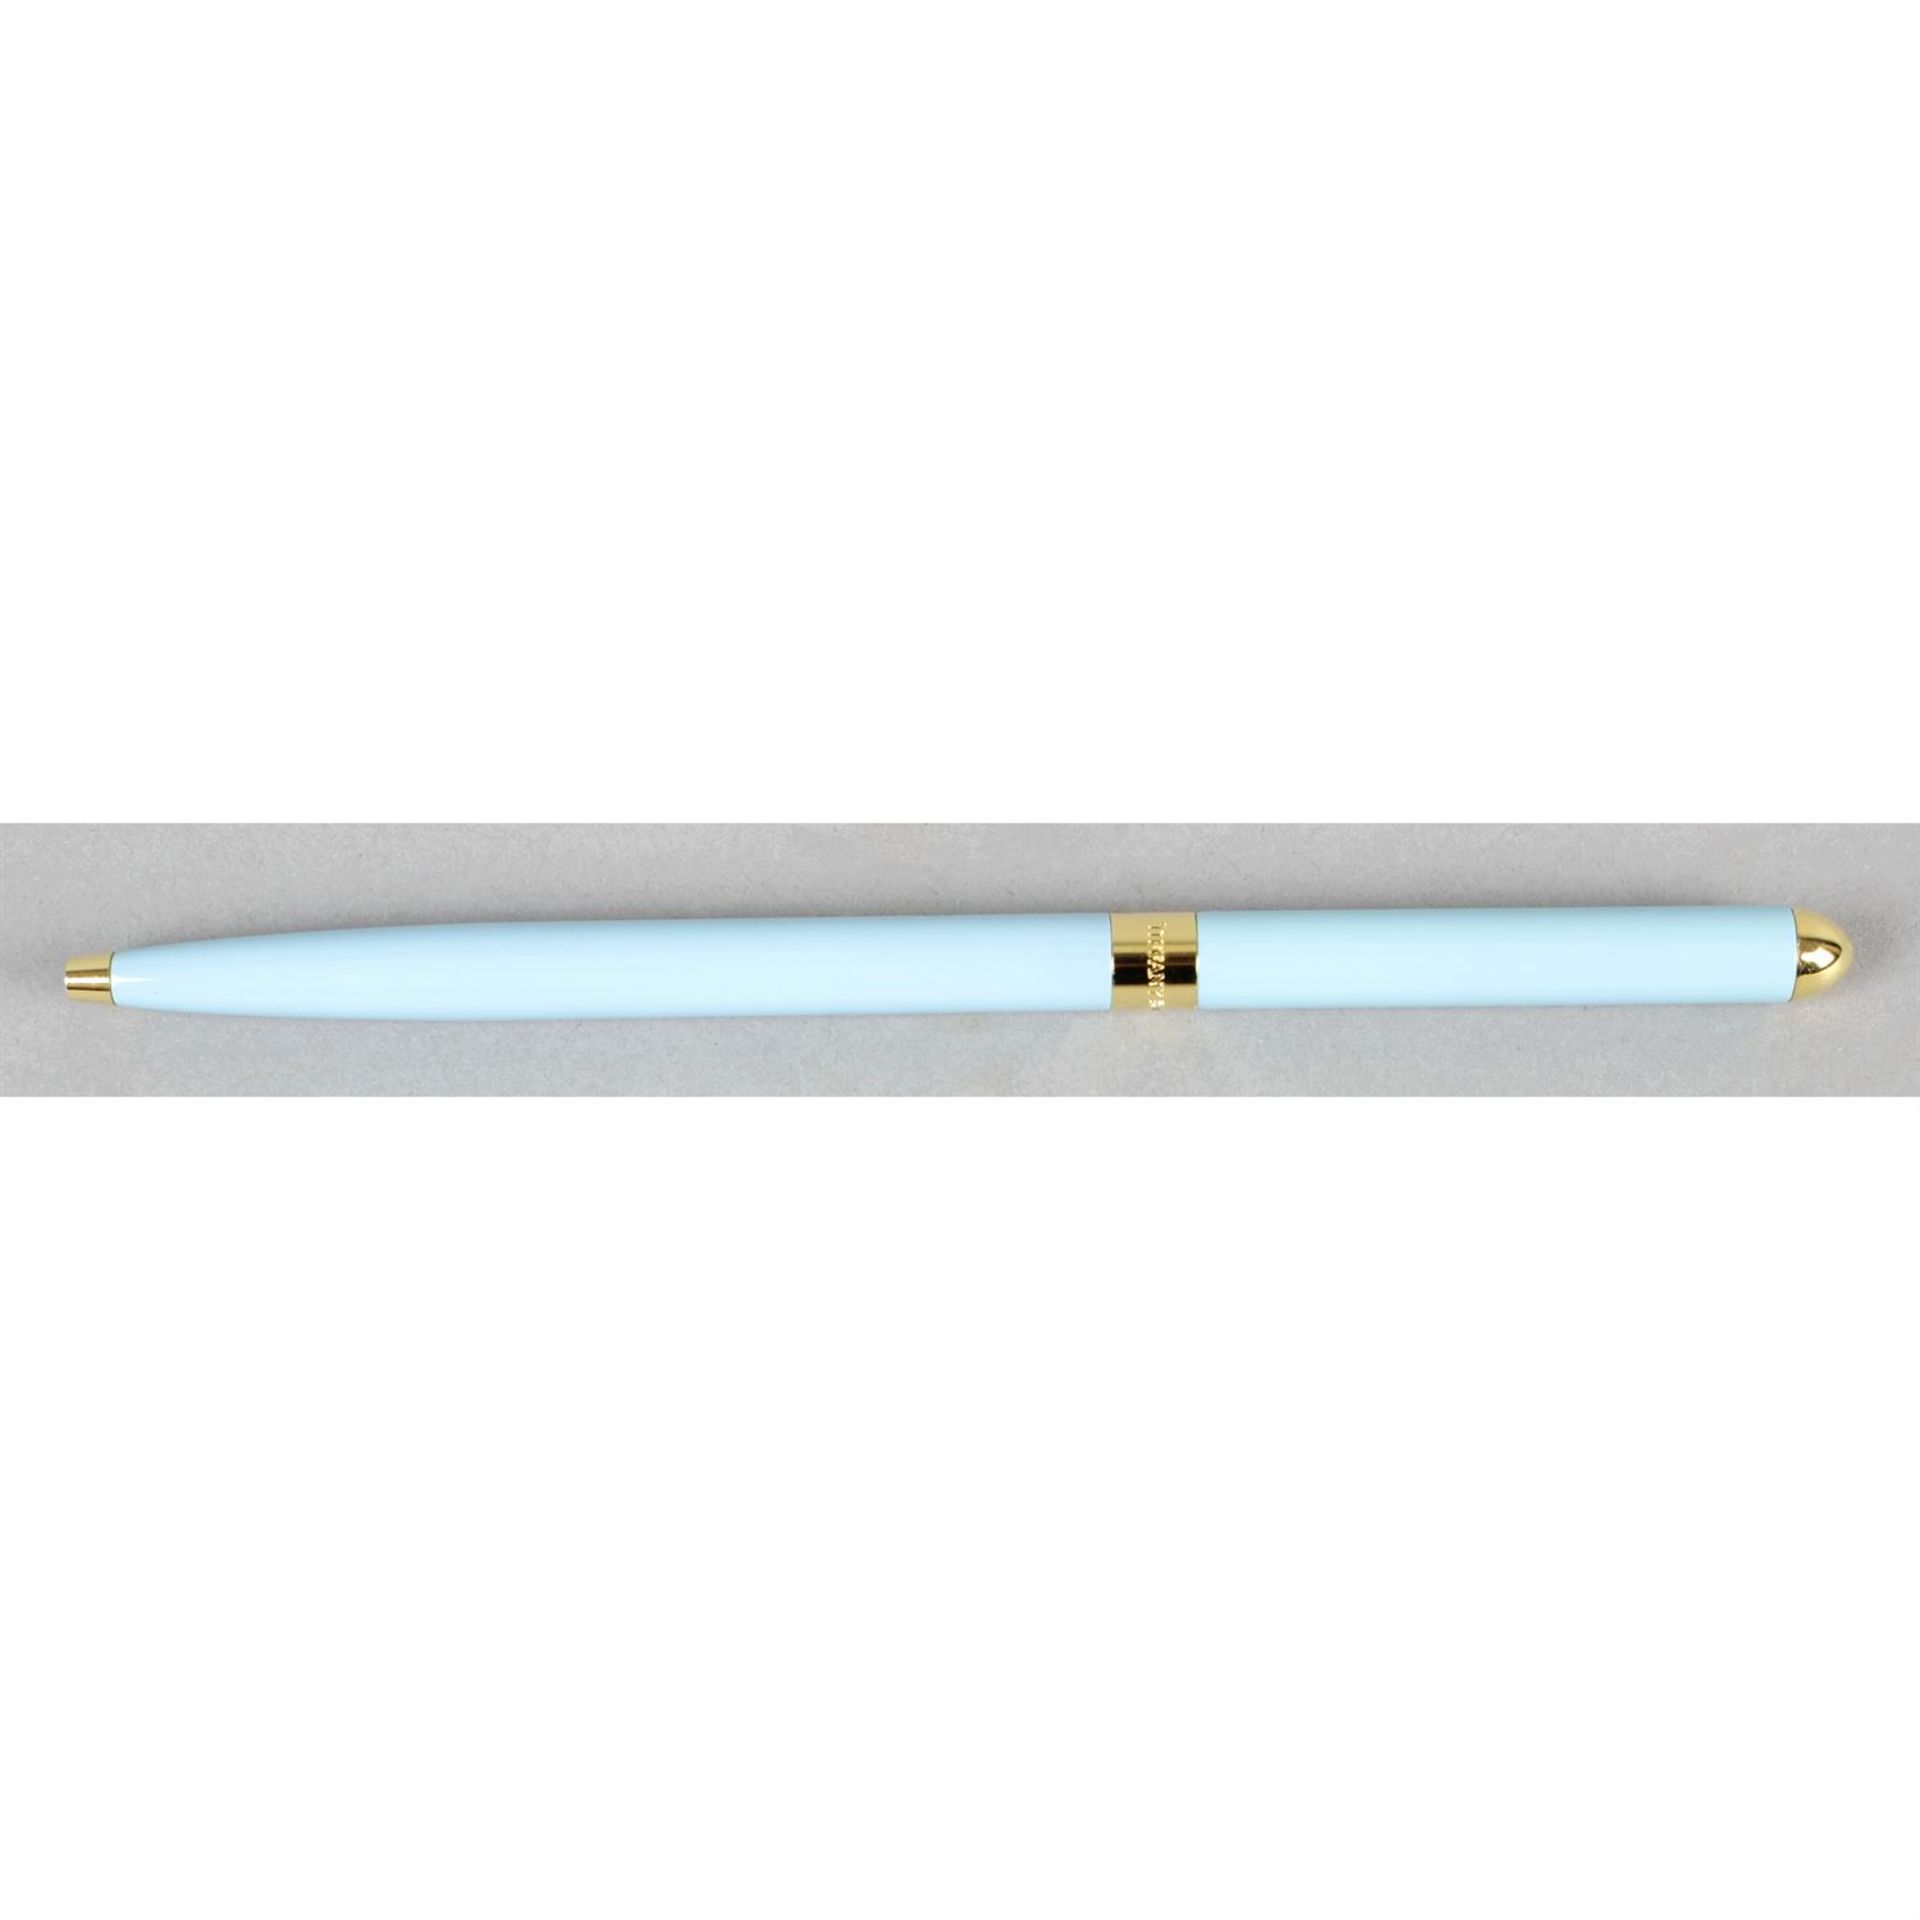 A Tiffany & Co retractable ball point pen.